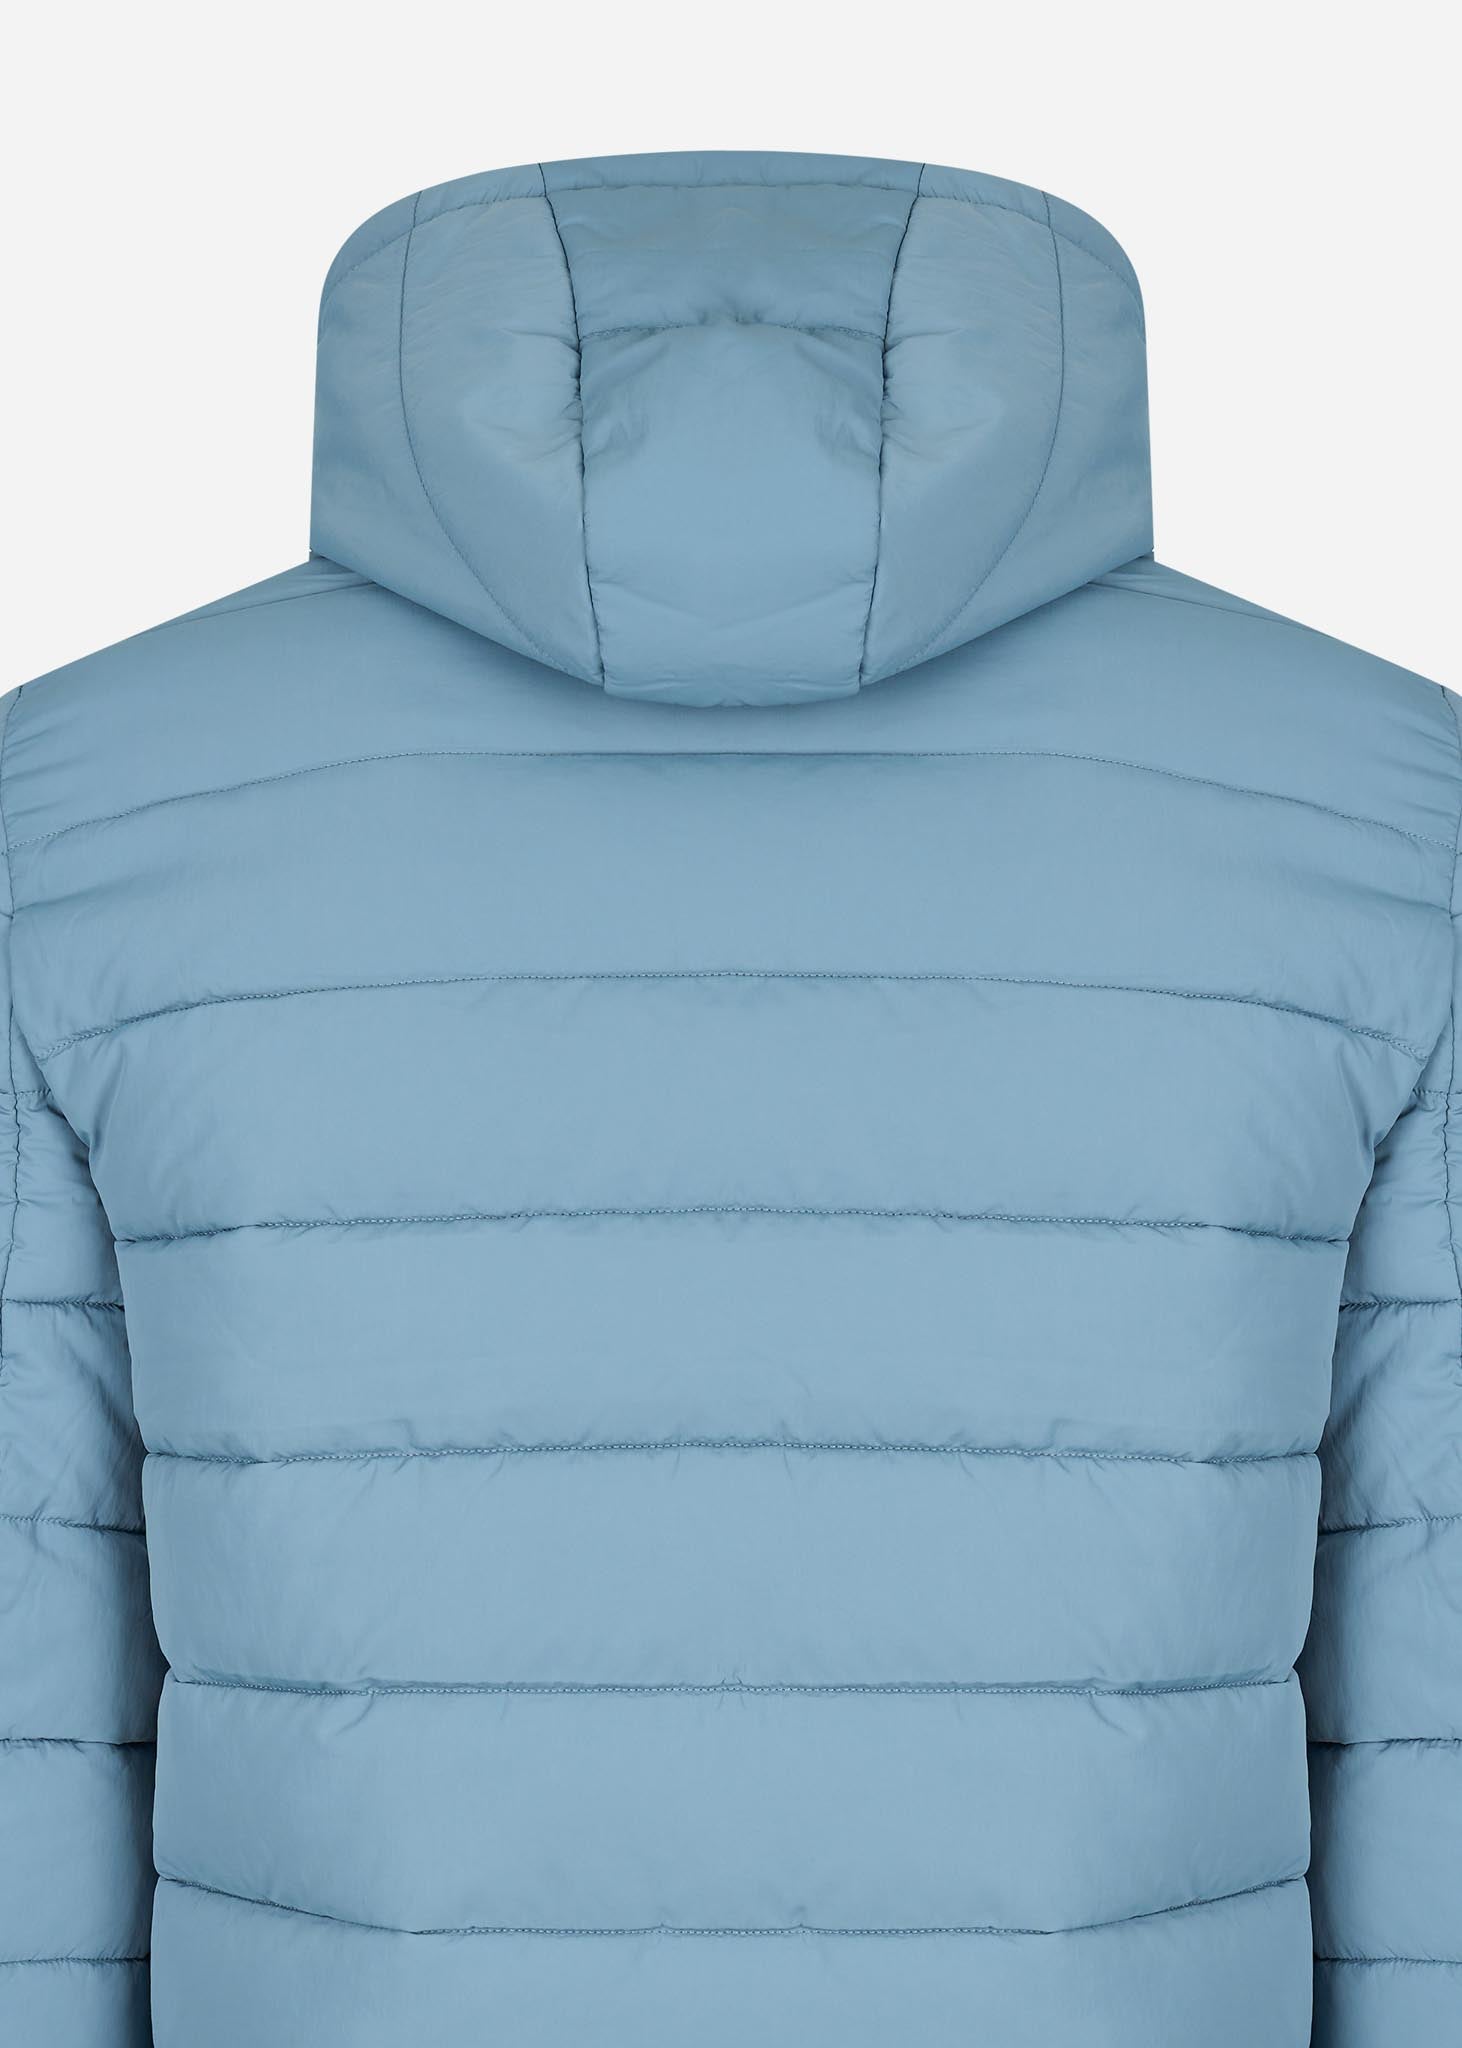 Lyle & Scott Jassen  Lightweight puffer jacket - skipton blue 